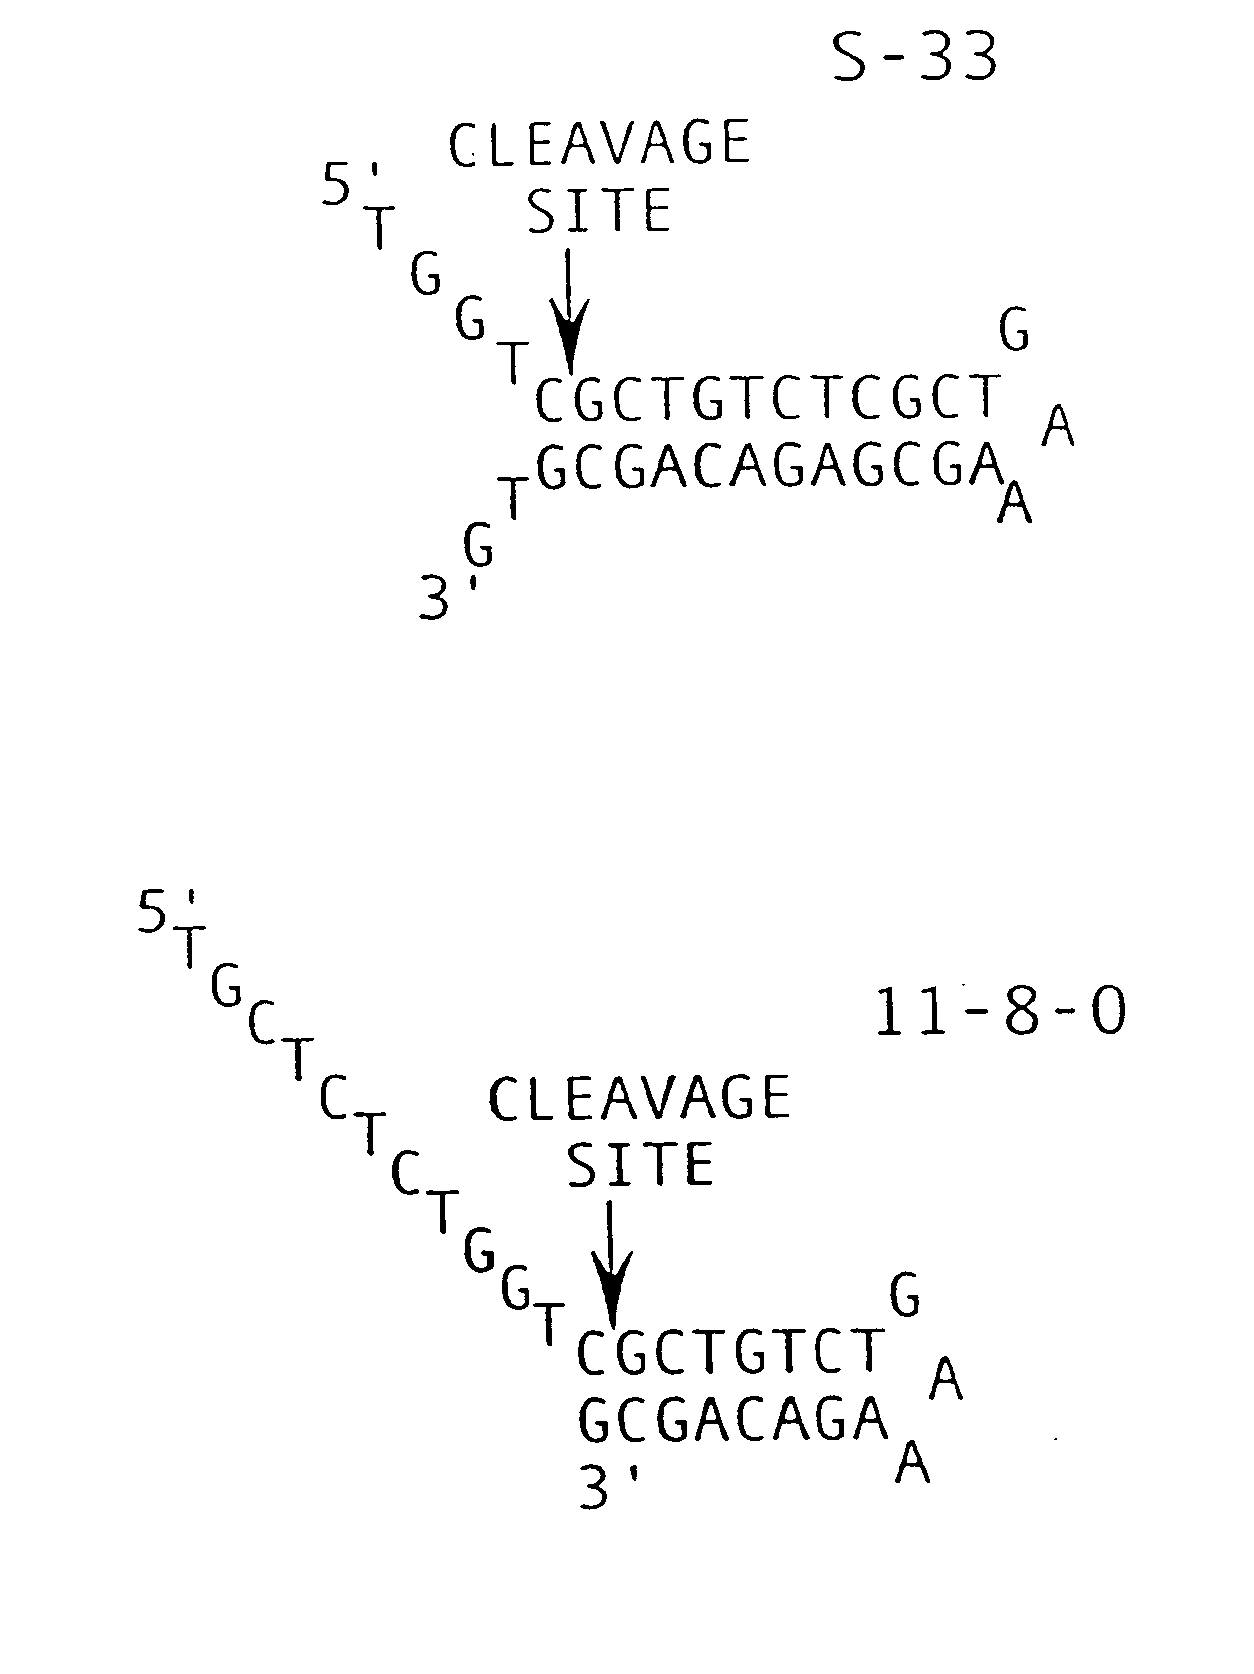 Nucleic acid detection compositions